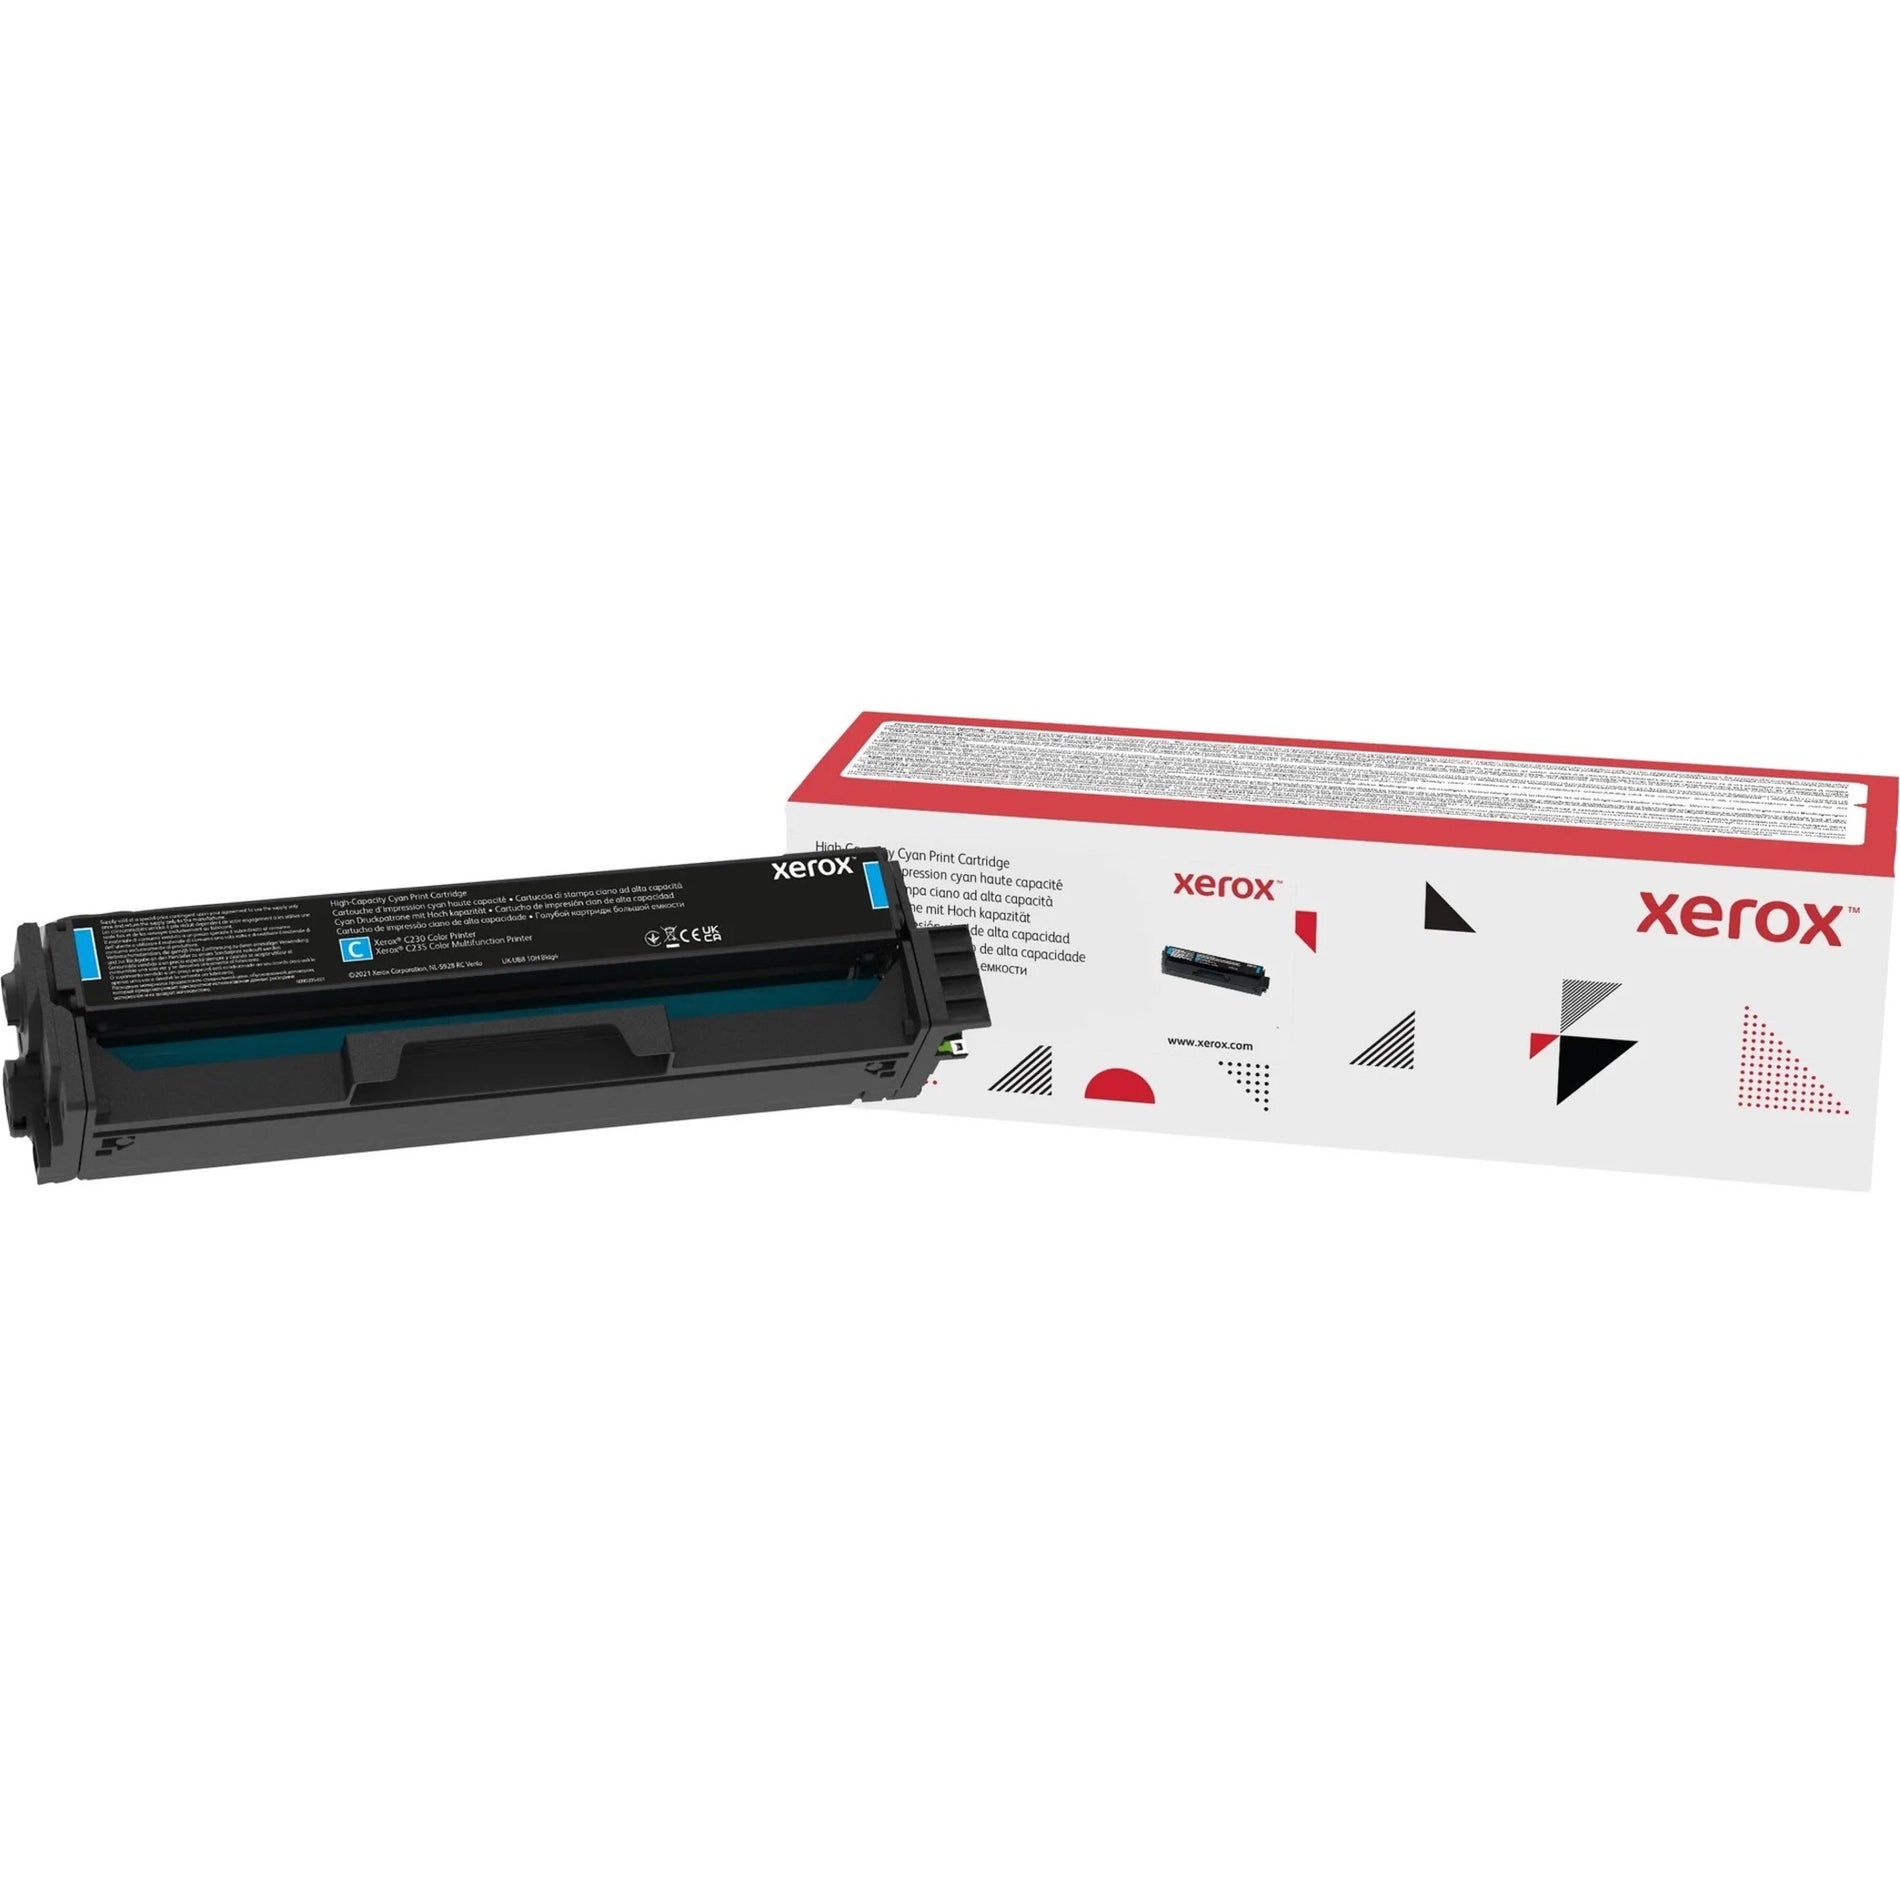 Xerox 006R04392 C230 / C235 Cyan High Capacity Toner Cartridge (2,500 pages), Original